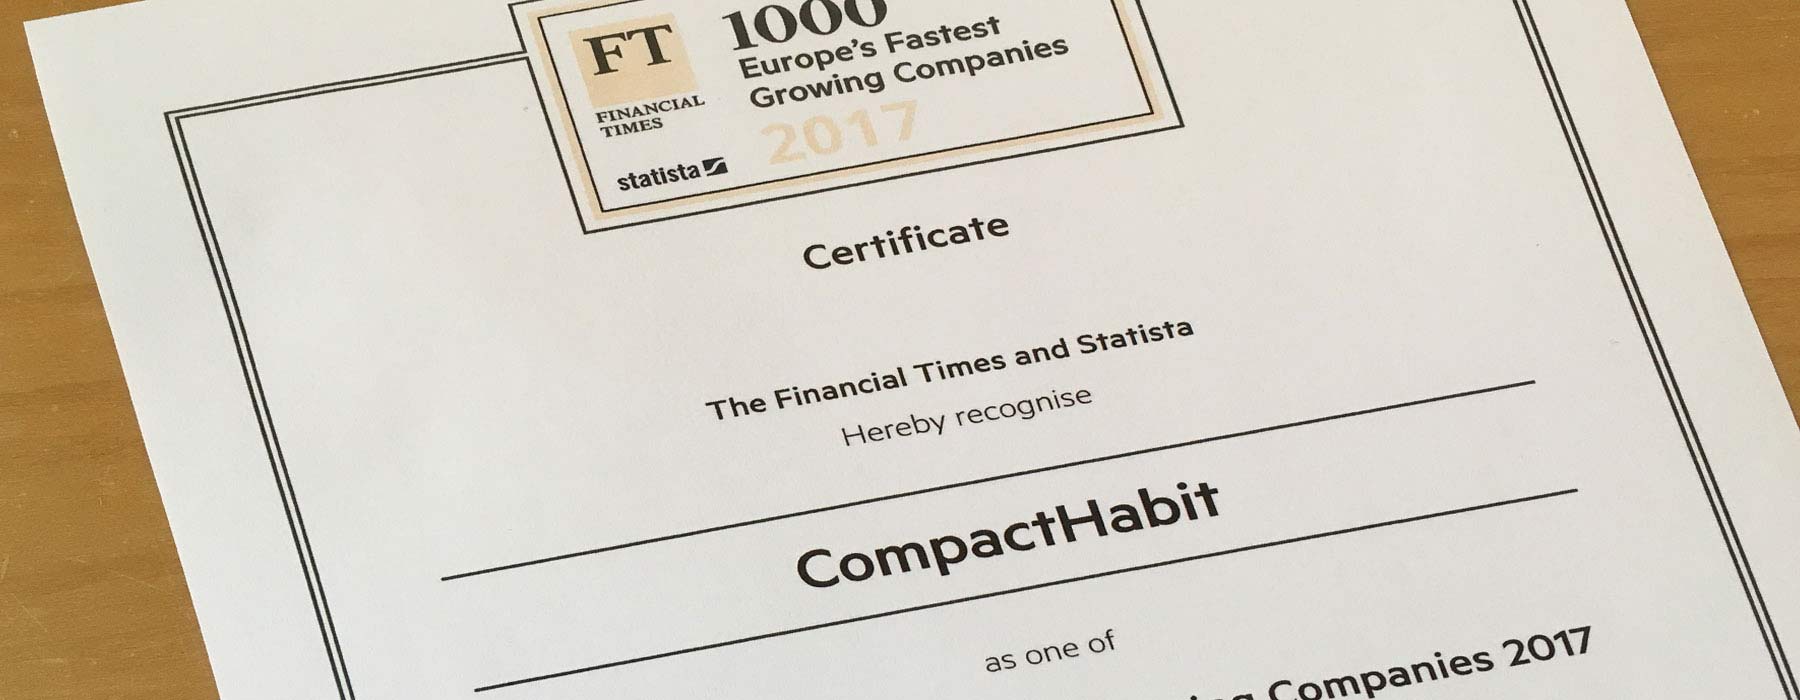 compacthabit certificate certificado Financial Times FT1000 fast growing